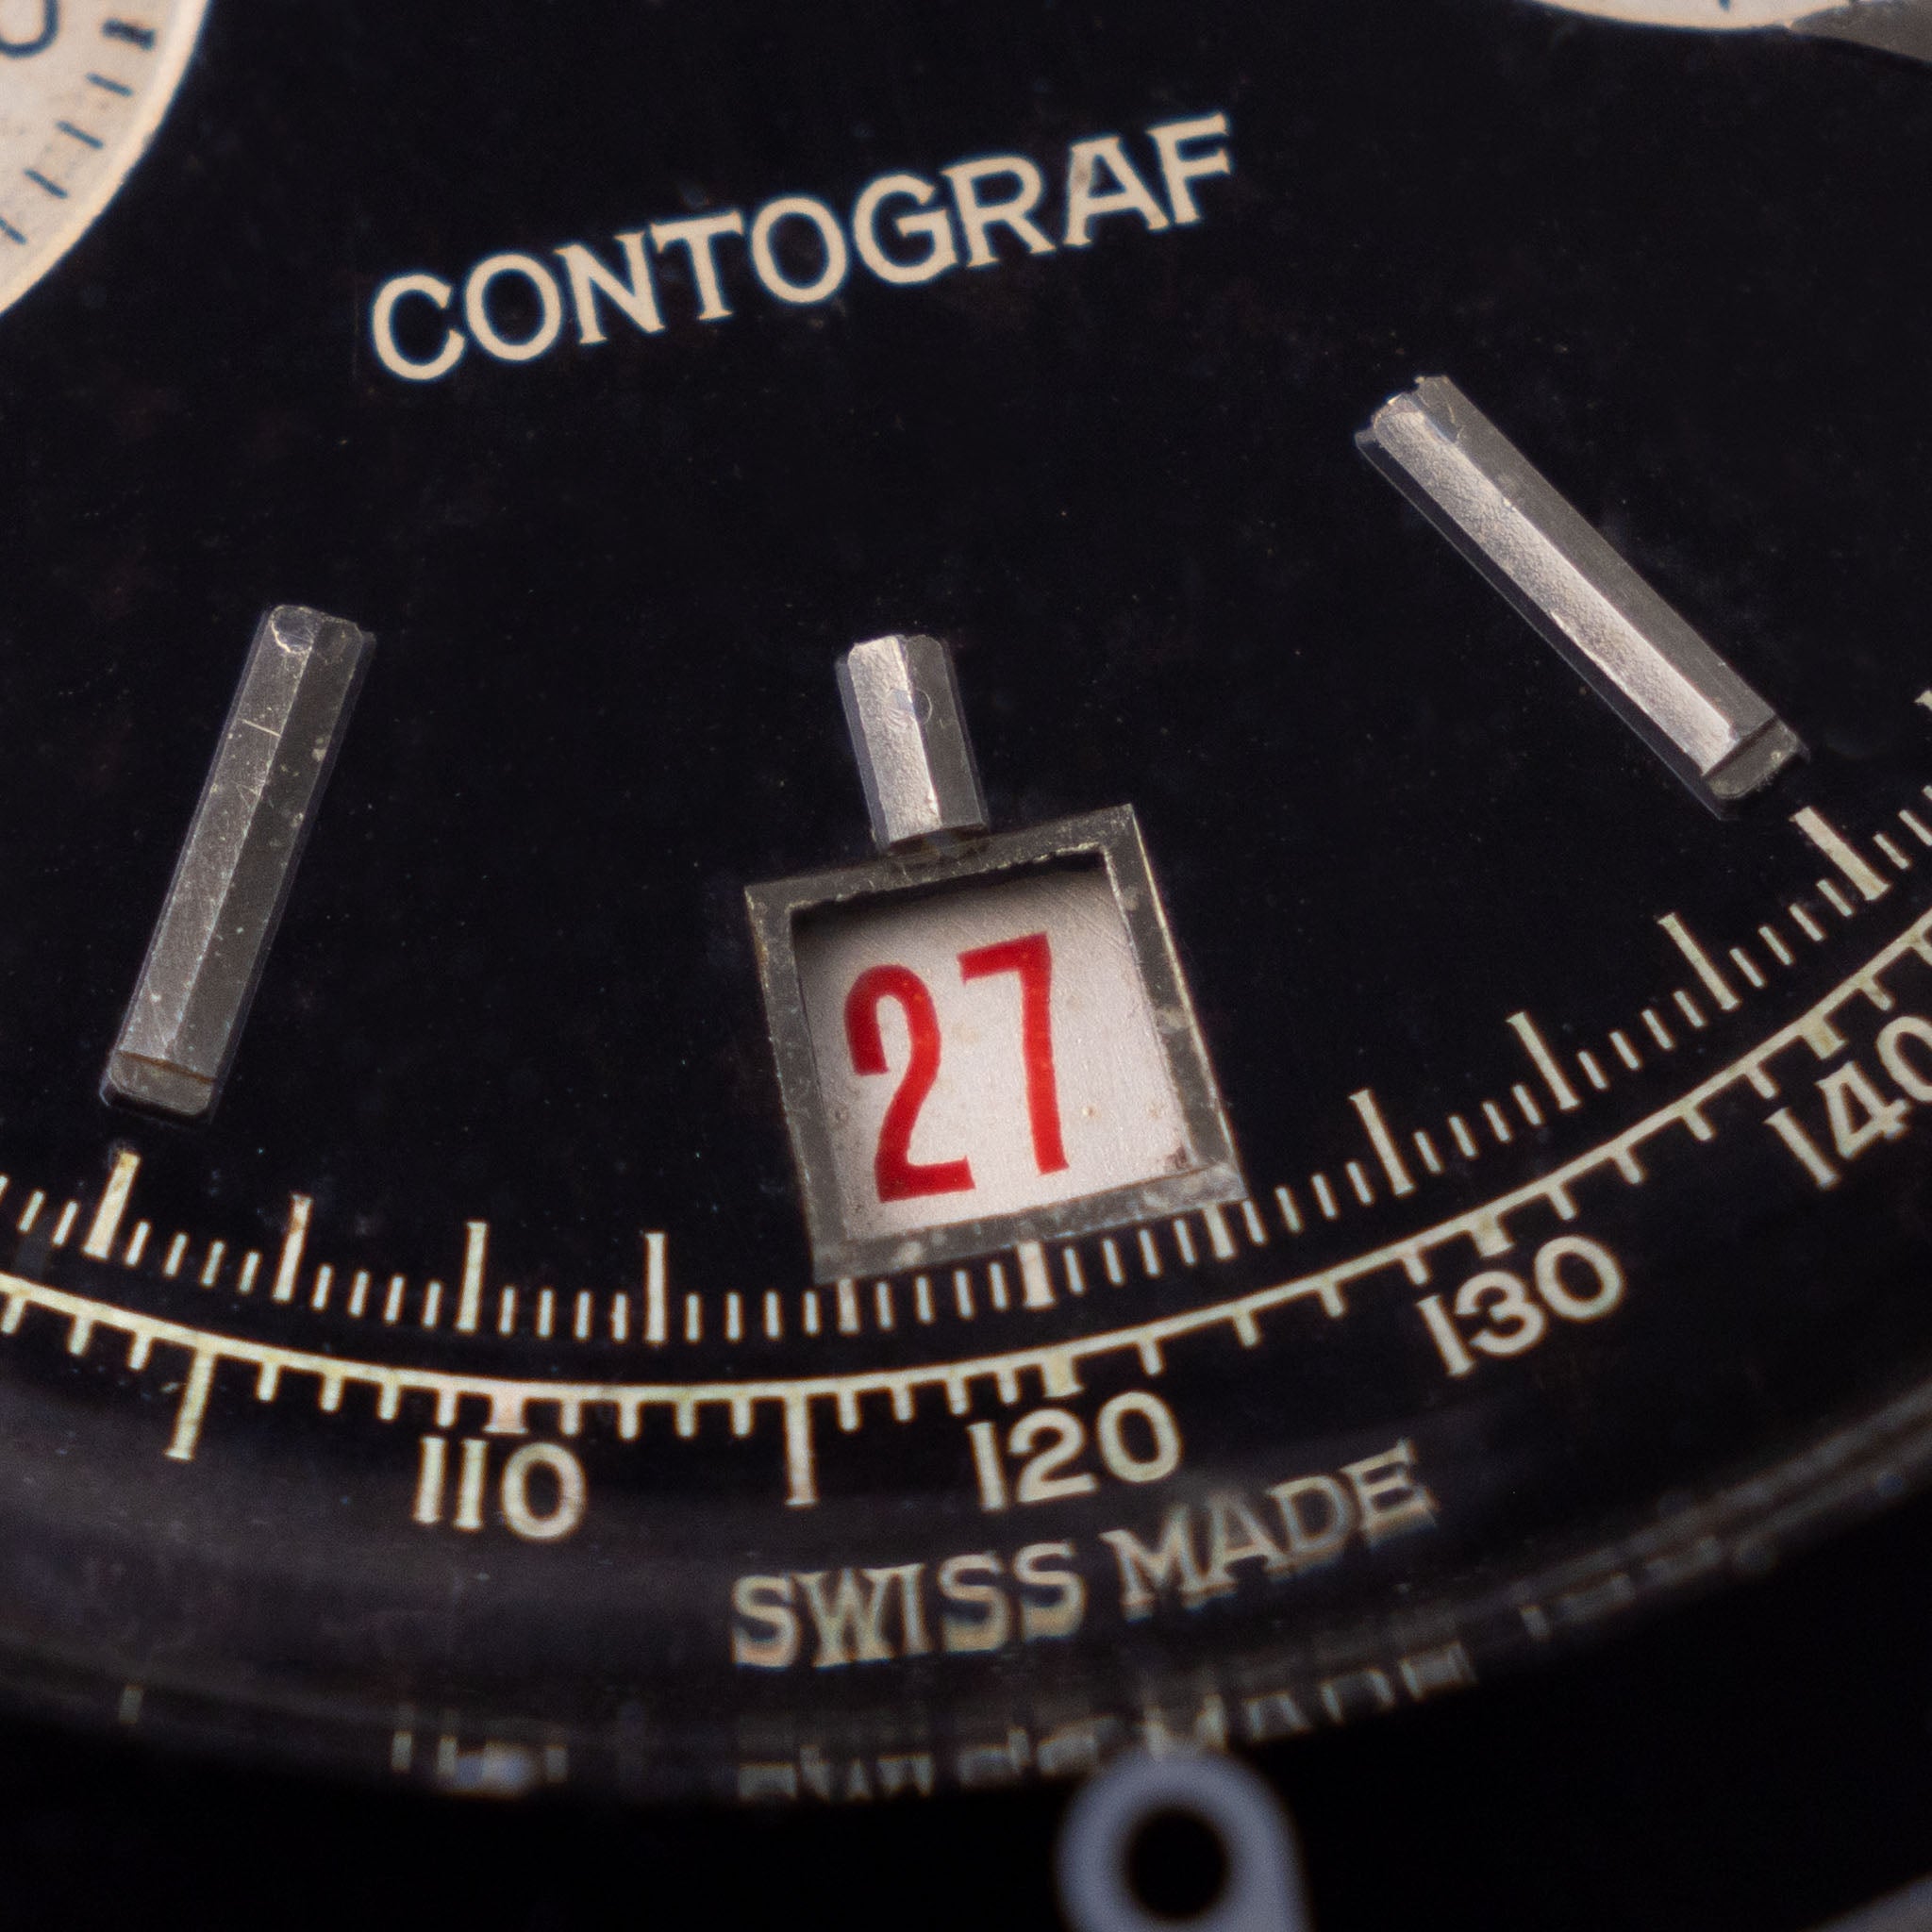 Eberhard & Co Contograf Black dial Steel Chronograph Ref 31501